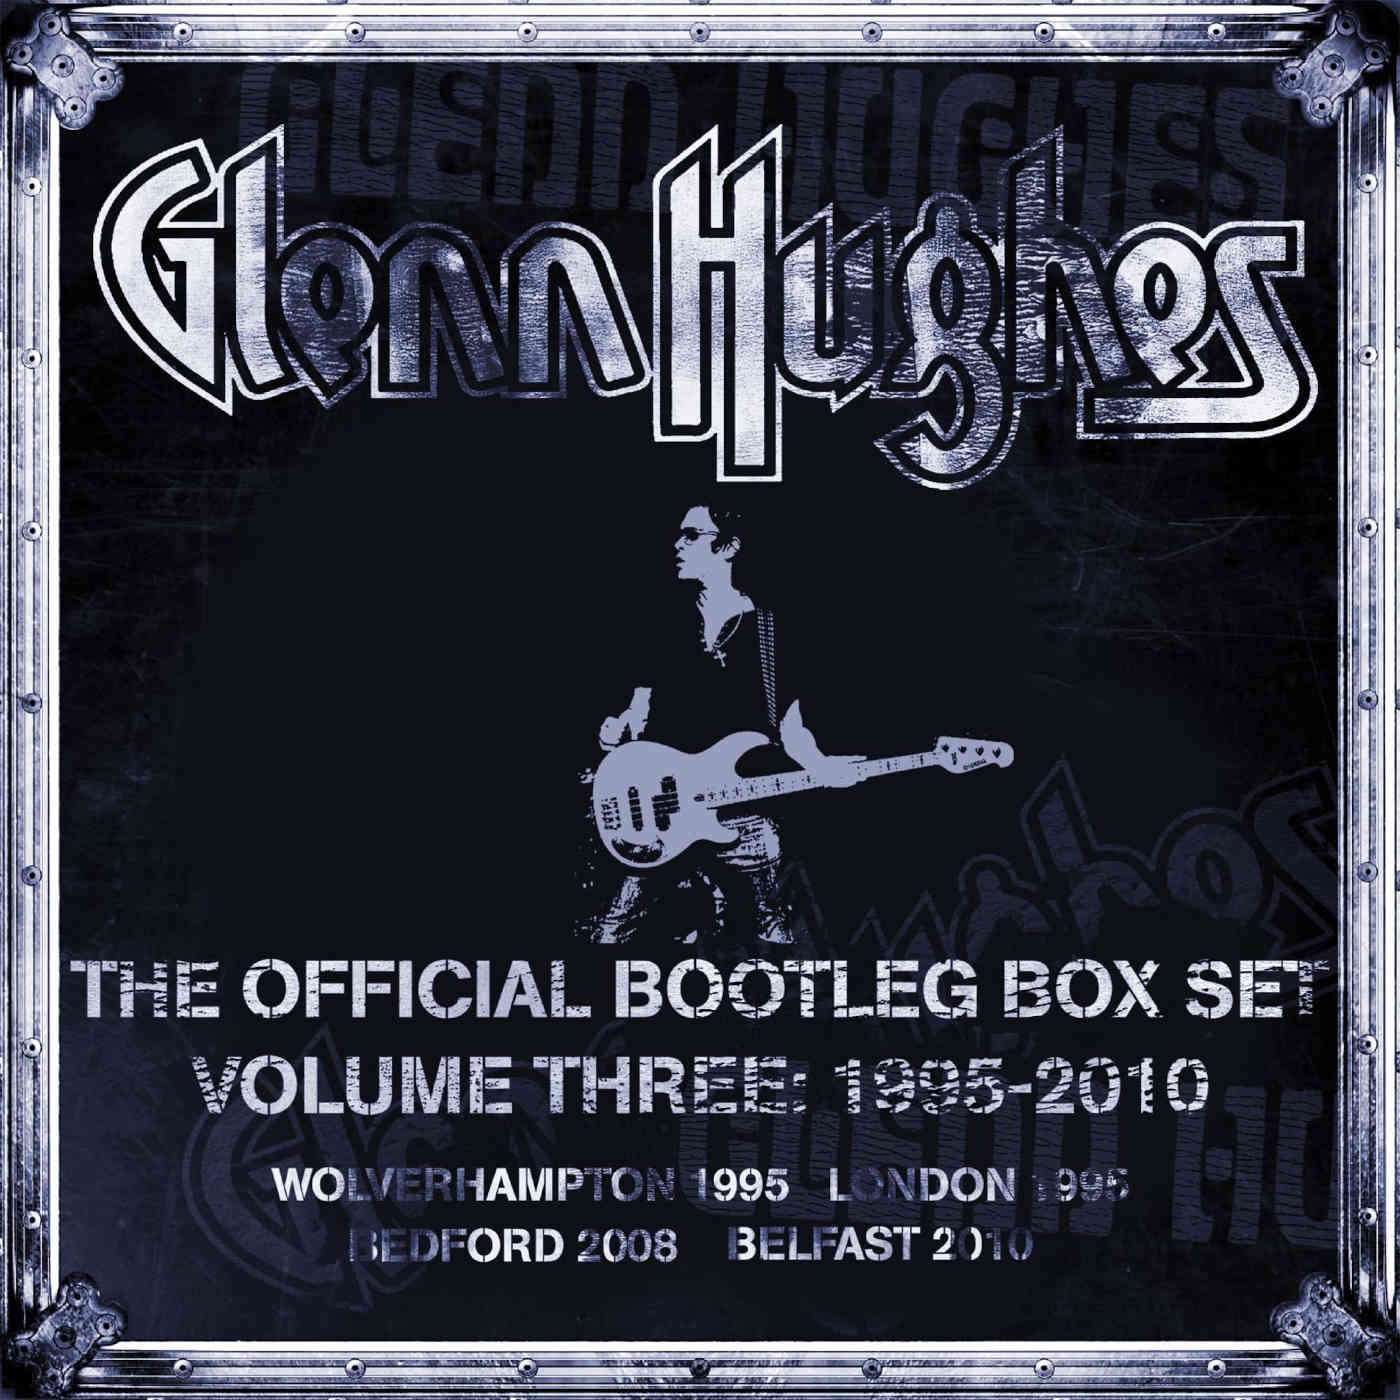 The Official Bootleg Box Set Volume Three 1995-2010